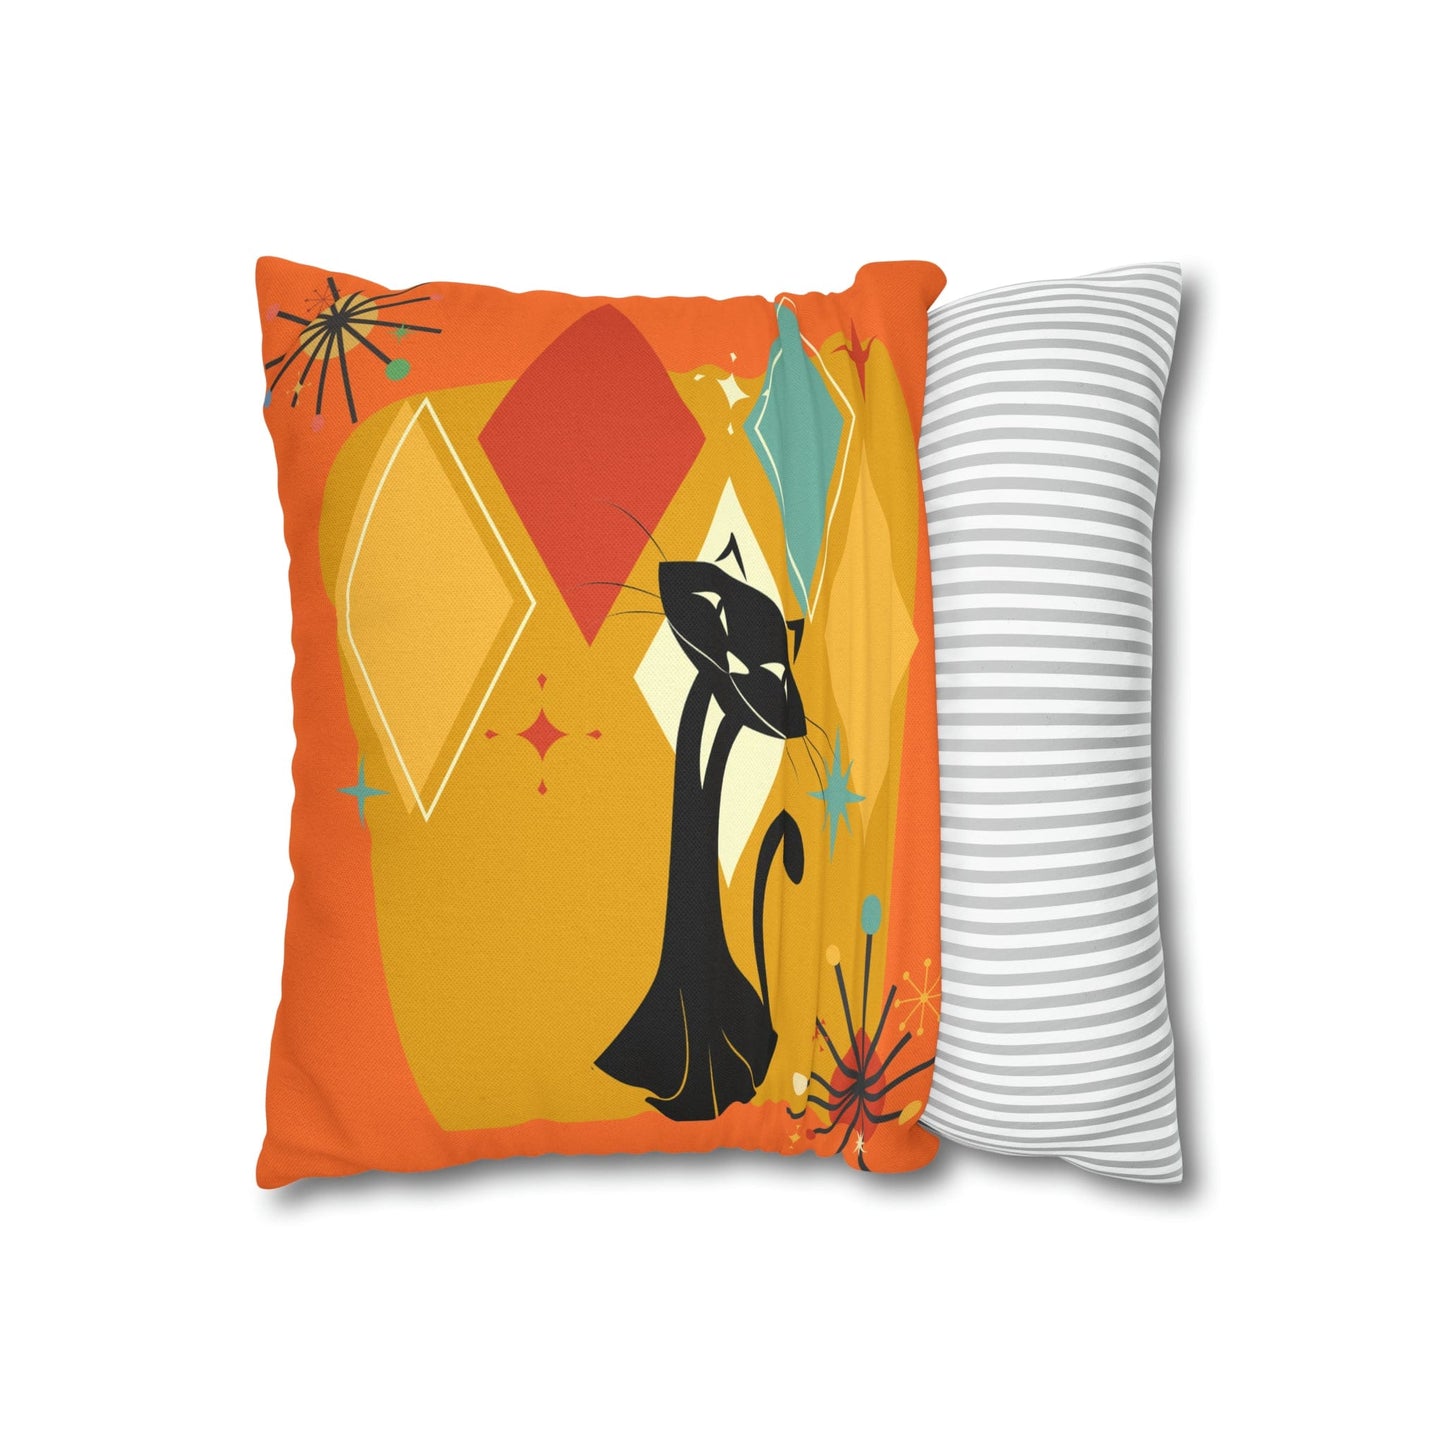 Kate McEnroe New York Retro Atomic Cat Pillow Cover, Mid Century Modern Orange, Teal, Yellow Cushion Covers, MCM Pillow Case Throw Pillow Covers